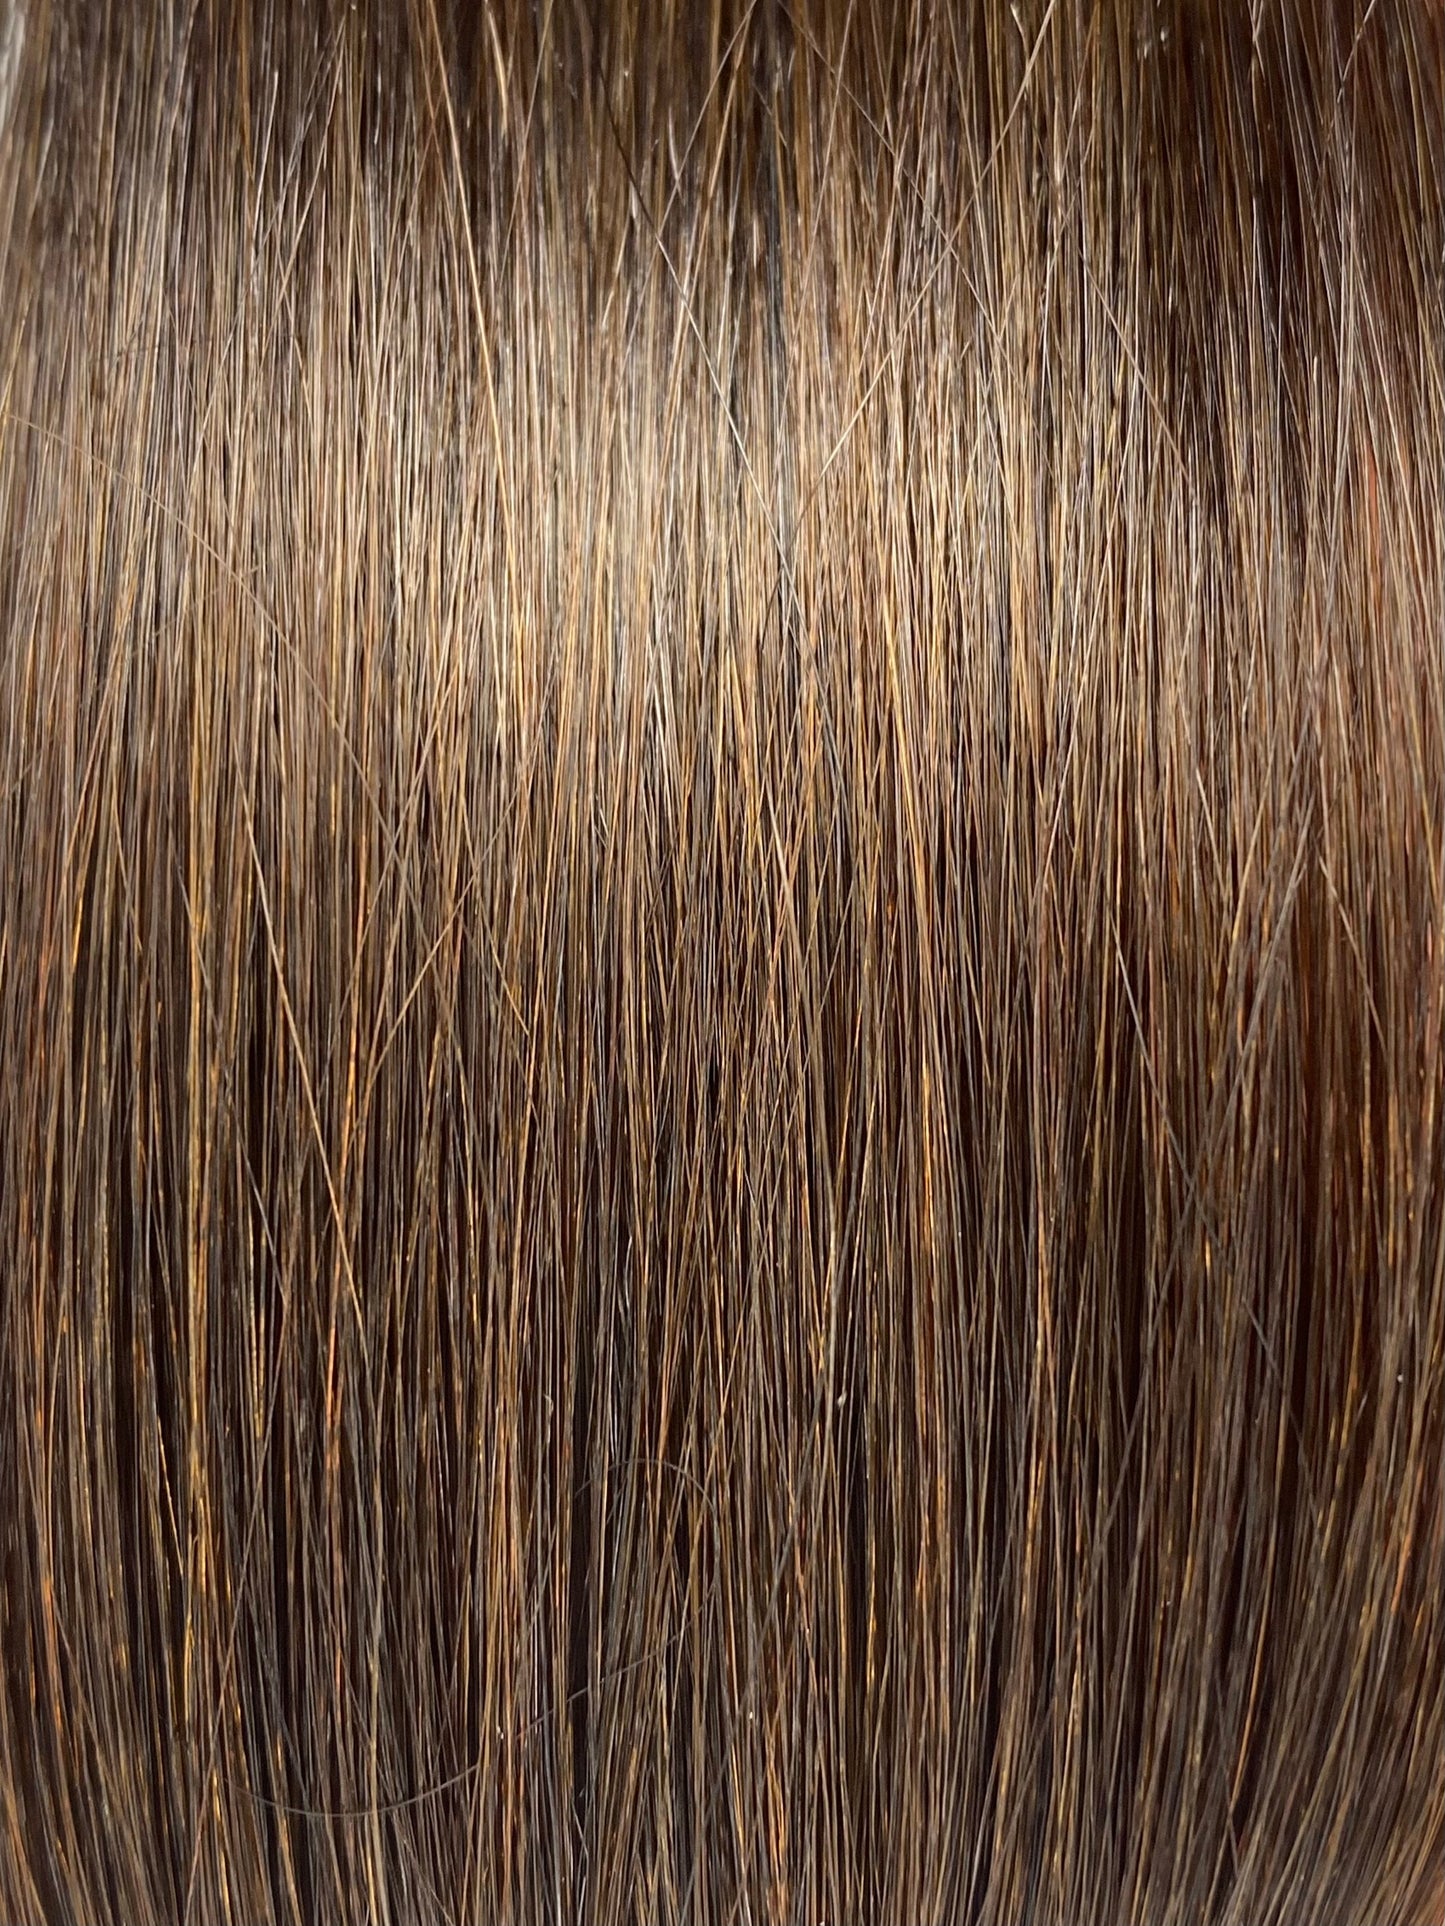 Fusion hair extensions #6 - 40cm/16 inches - Light Chestnut Fusion Euro So Cap 